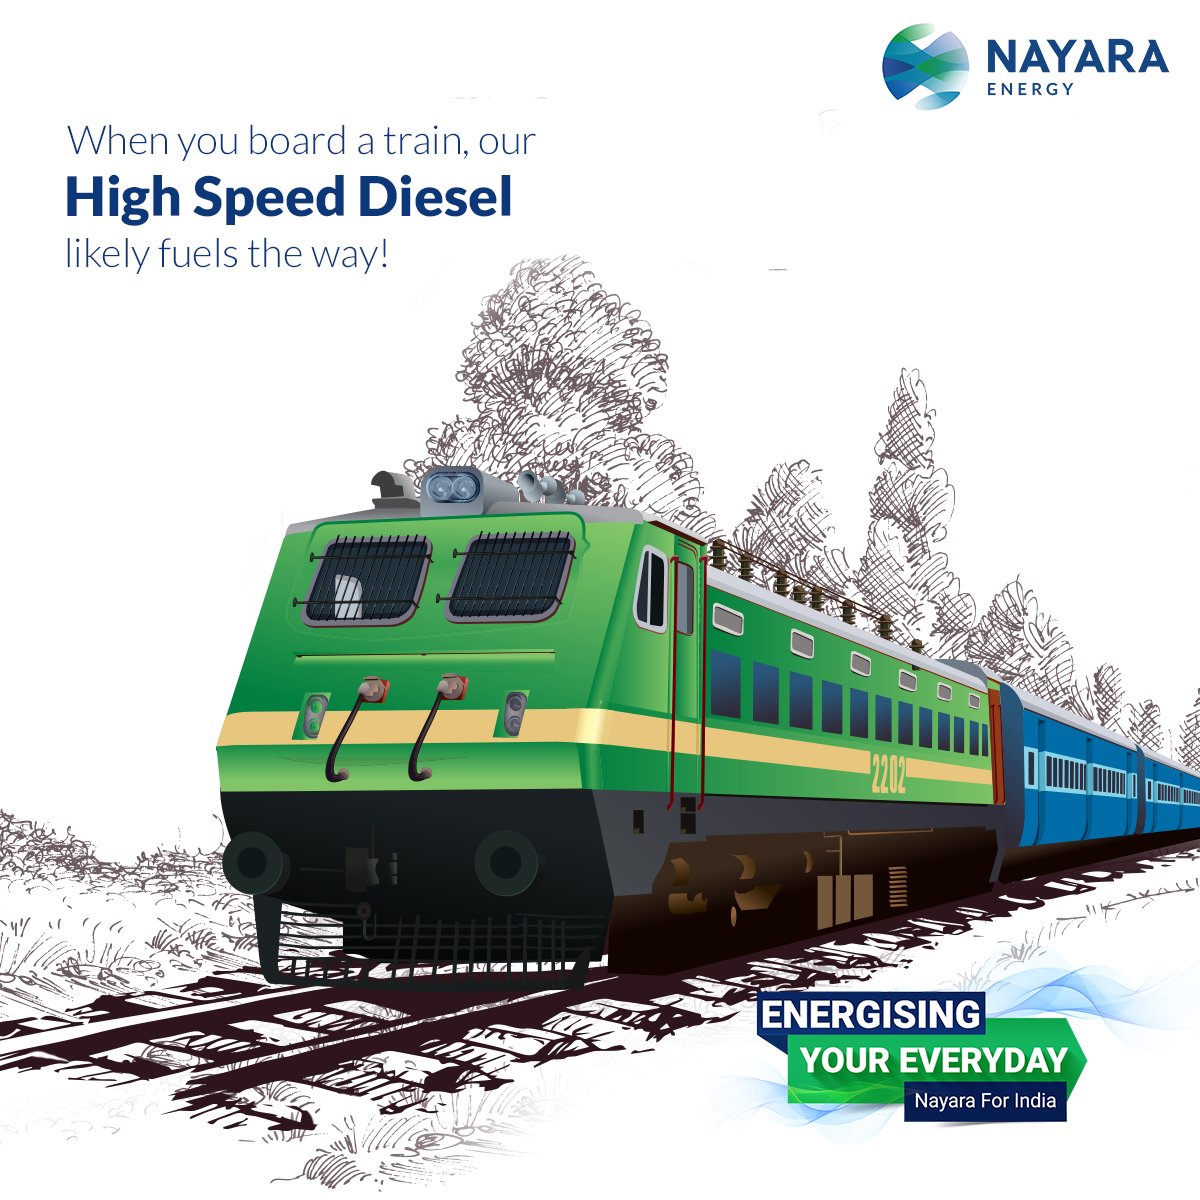 As distinguished suppliers of high-speed diesel to major industries like Railways, State Road Transport, and more, we help fuel India's transport. To know more, visit: bit.ly/3qgCN2M #NayaraEnergy #EverydayImpact #HighSpeedDiesel #NayaraForIndia #EnergisingYourEveryday